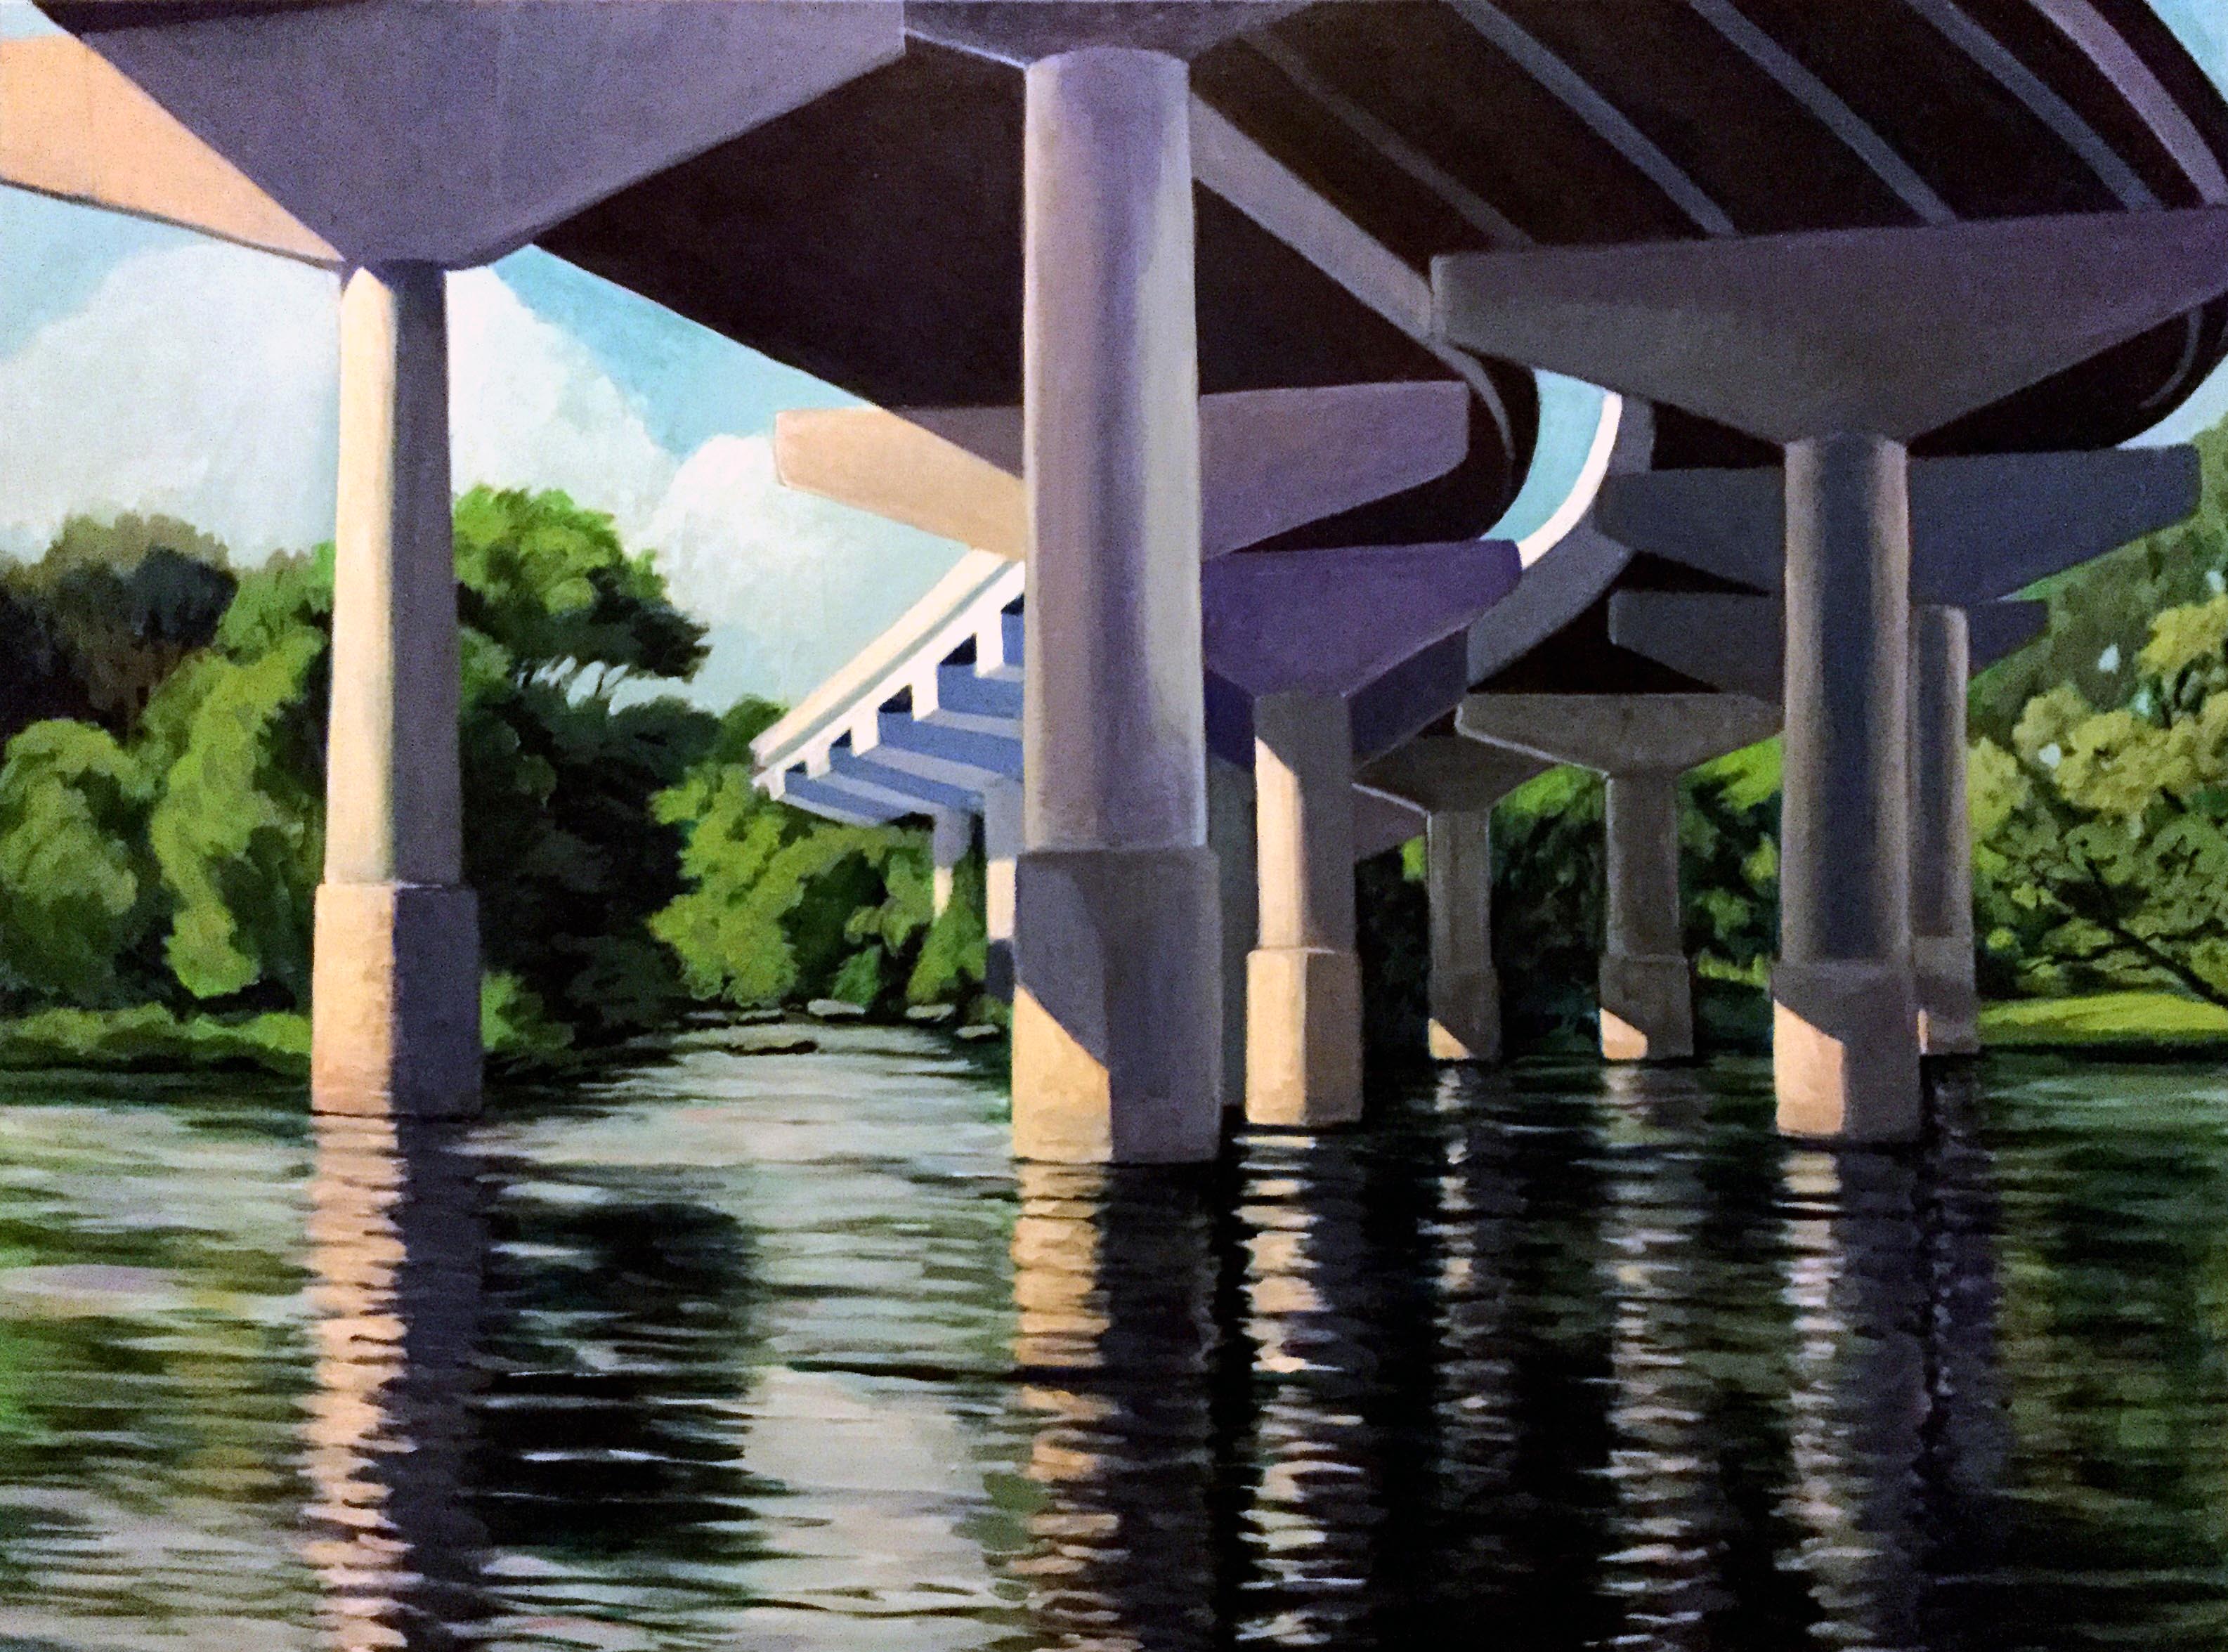 Underneath: Wiley Bridge